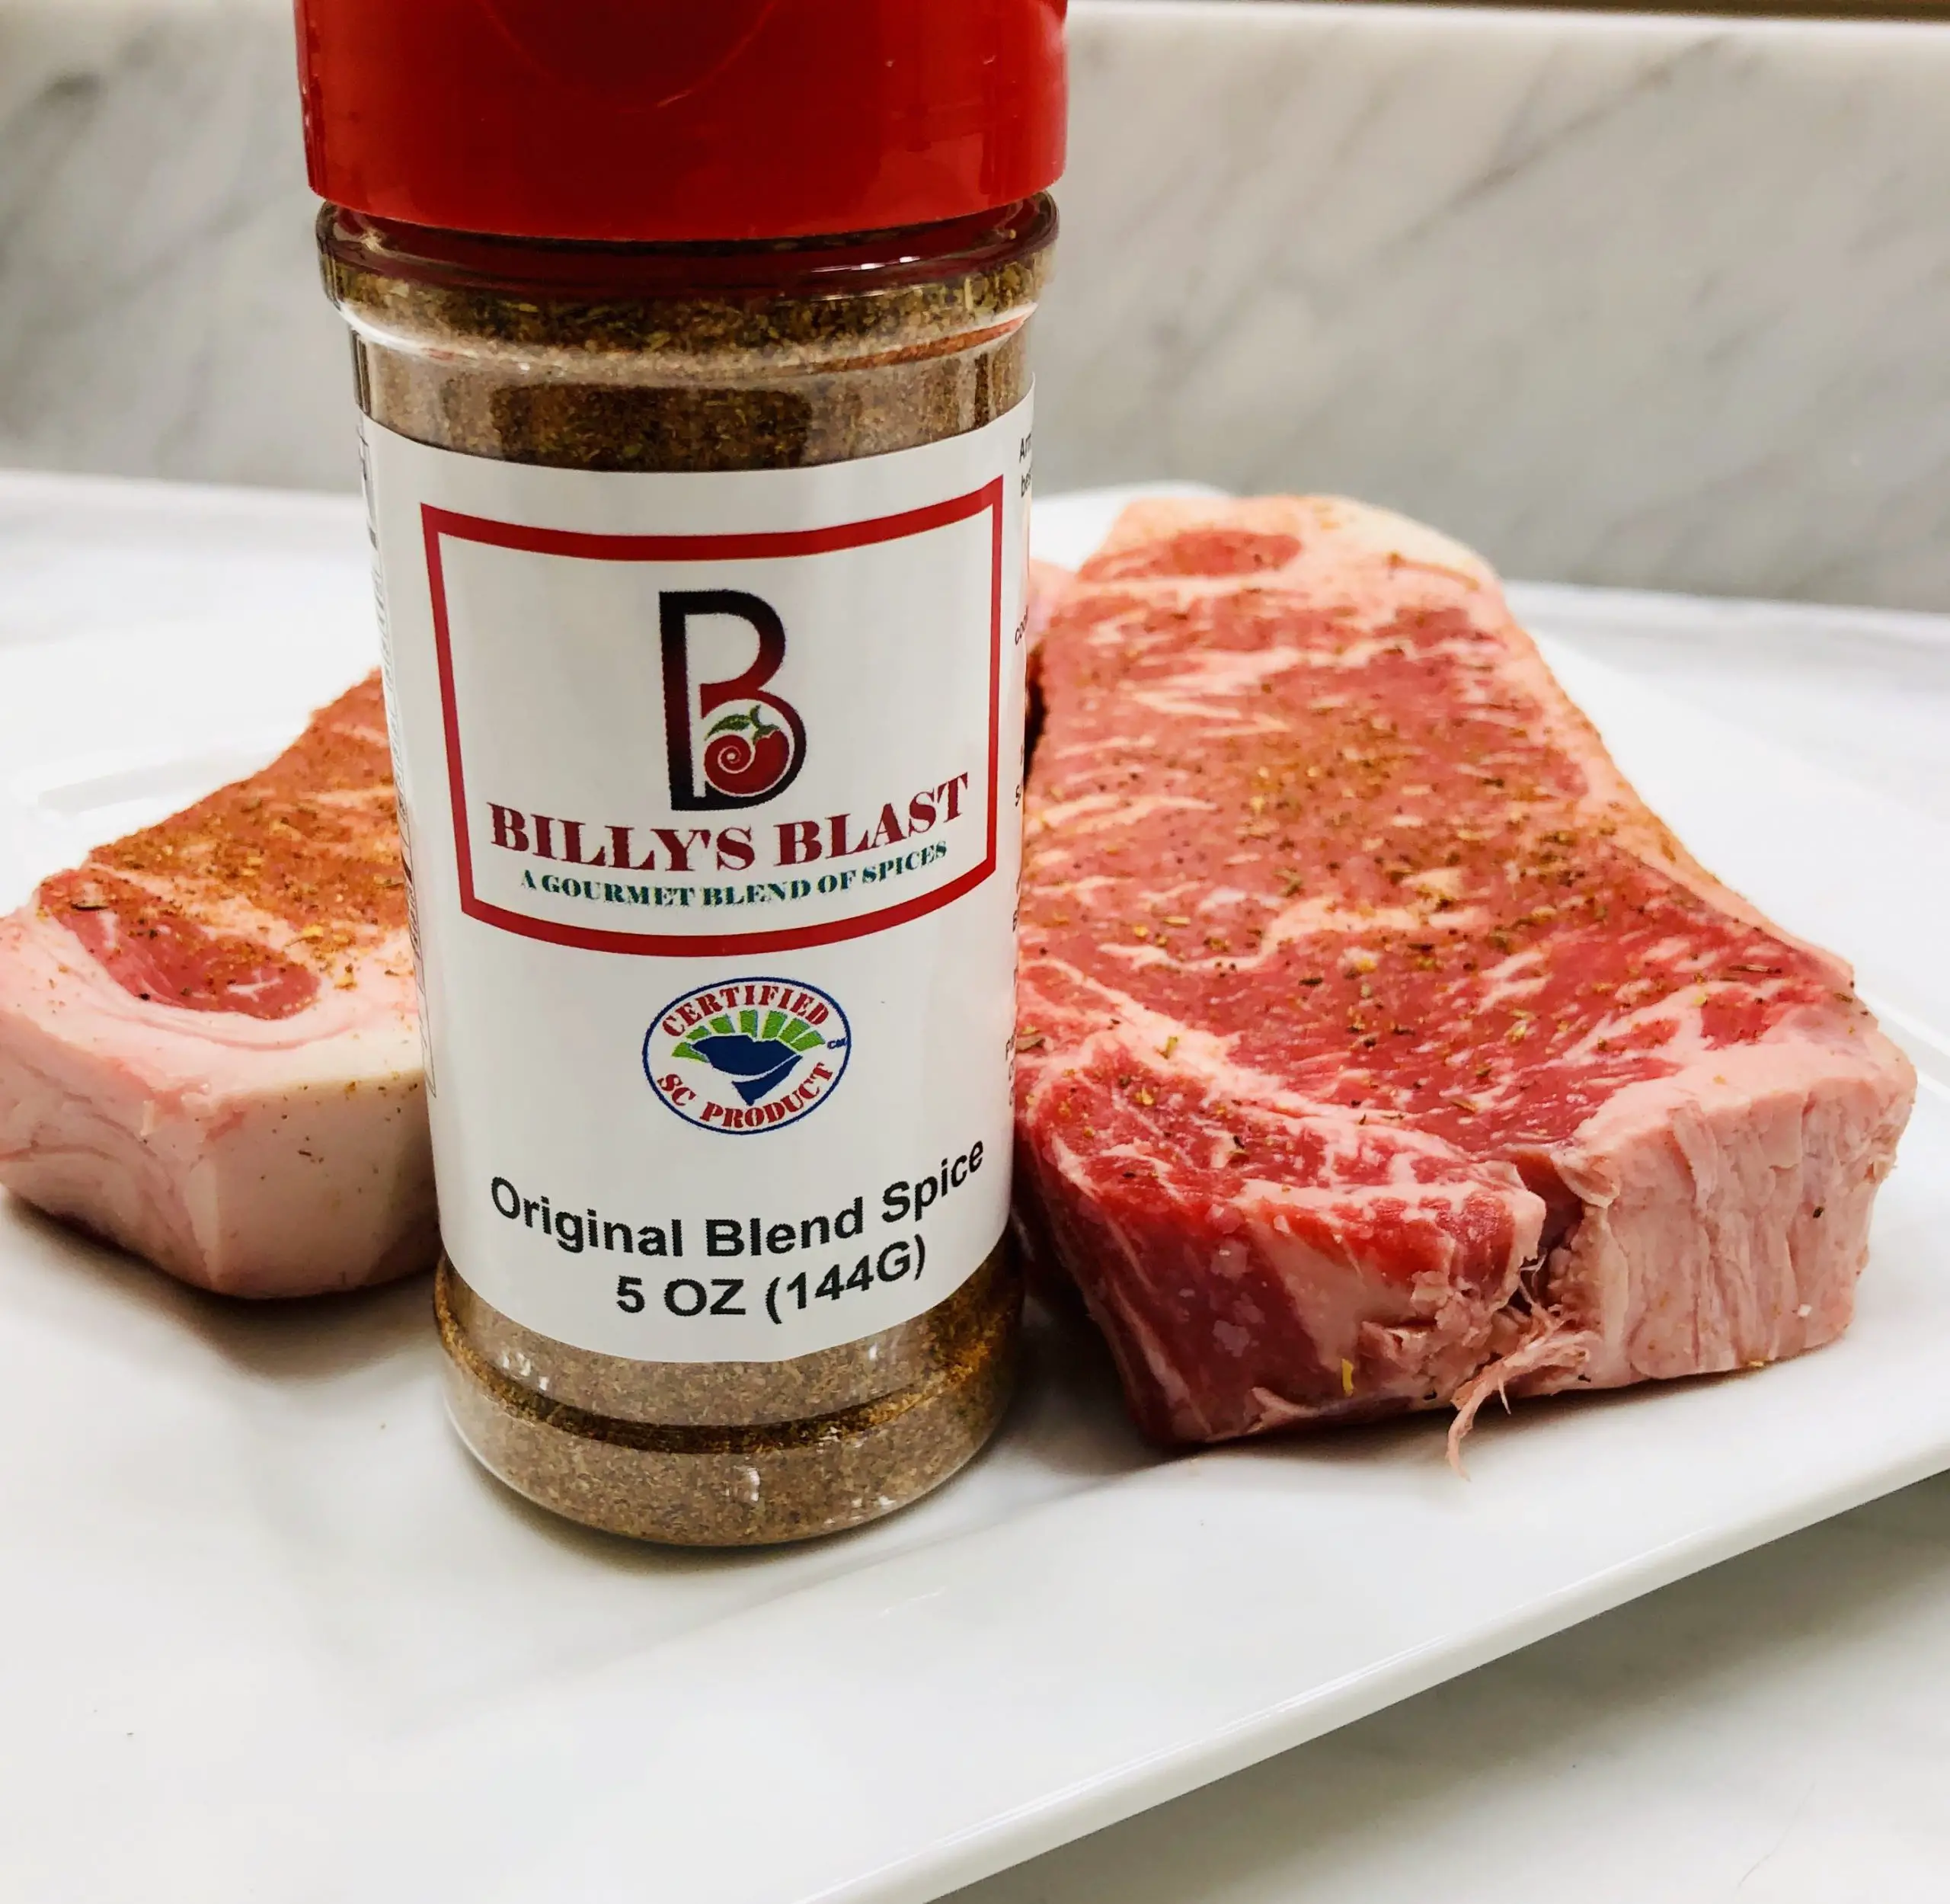 BillysBlast Original Blend on NY Steaks